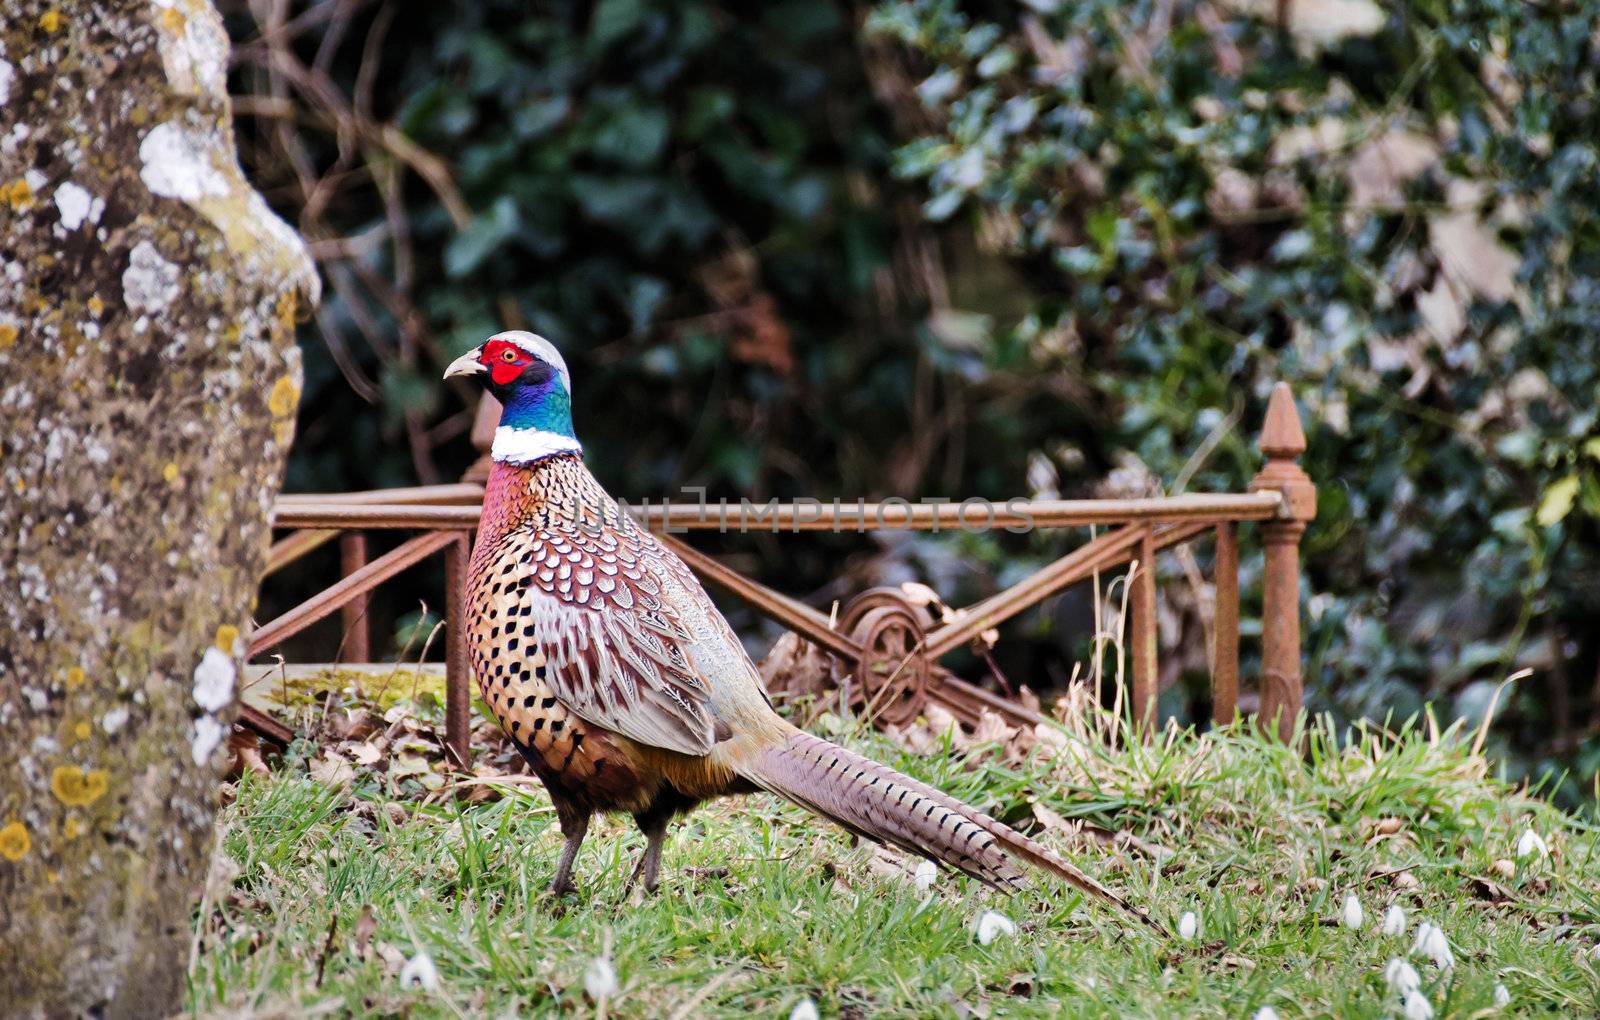 Male or Cock pheasant in a churchyard